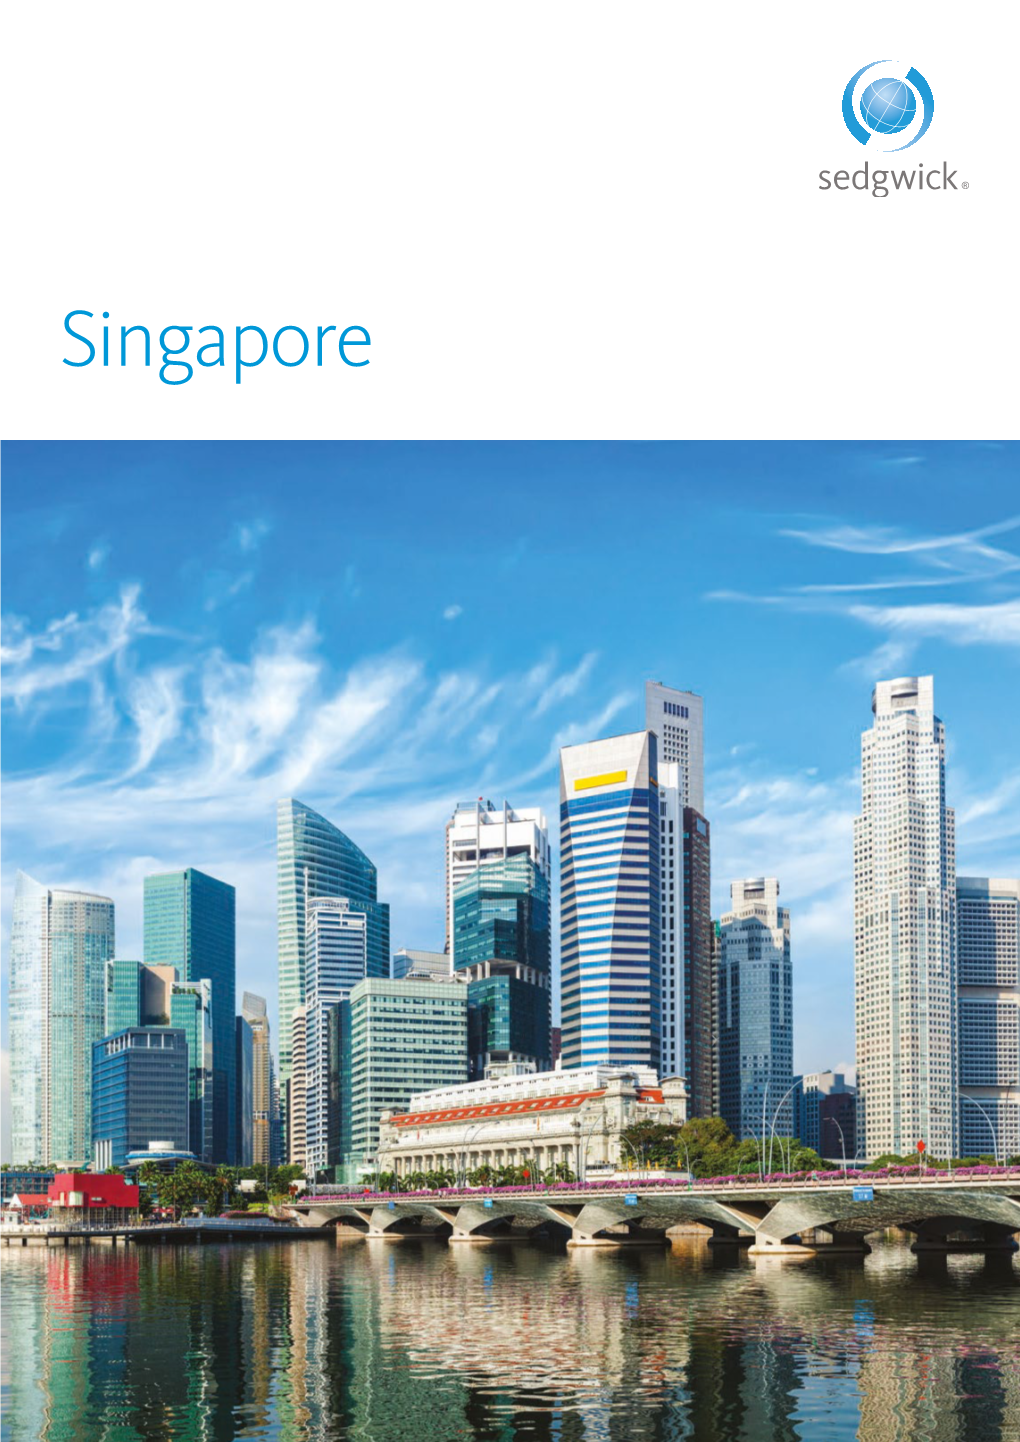 Singapore a Local Business Partner